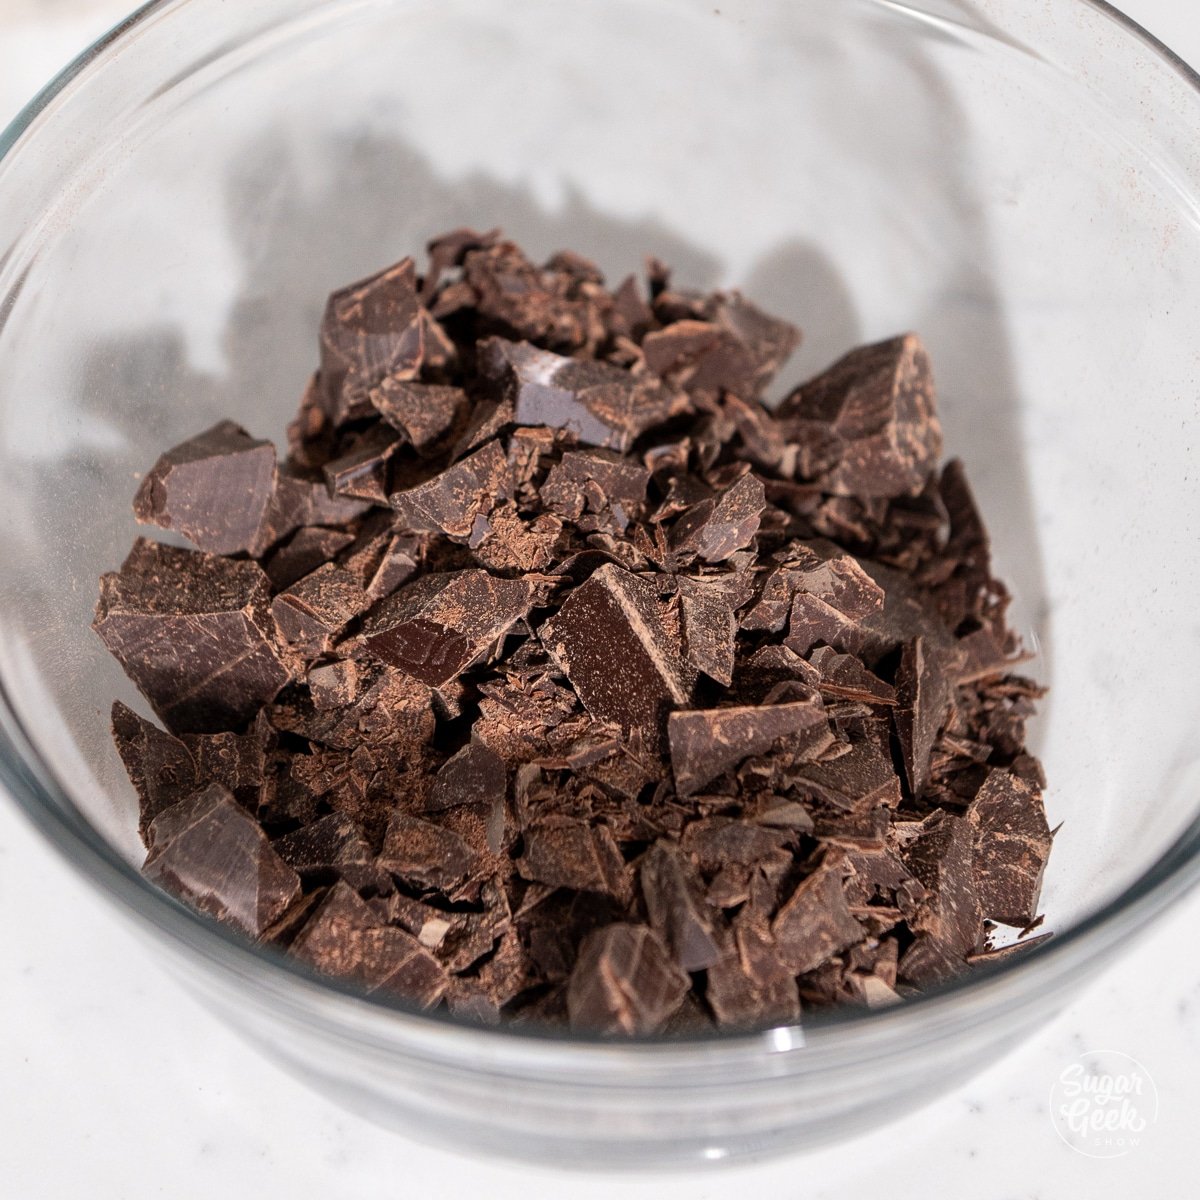 chopped dark chocolate in a glass bowl